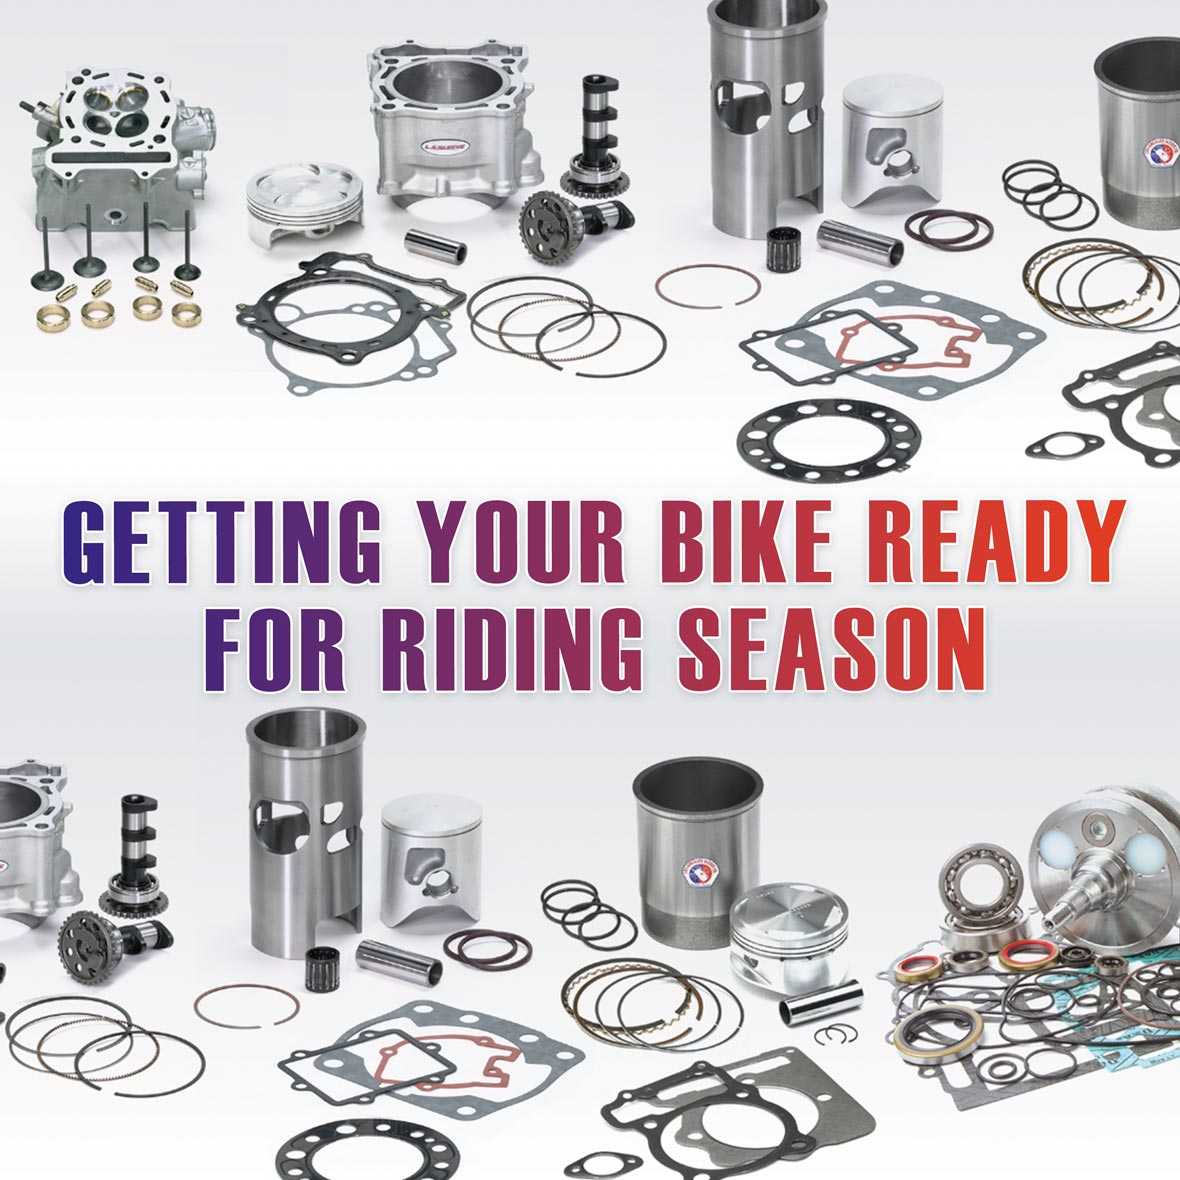 https://www.lasleeve.com/assets/uploads/promo1/5953/lasleeve-getting-your-bike-ready-for-riding-season-2022-s__med.jpg